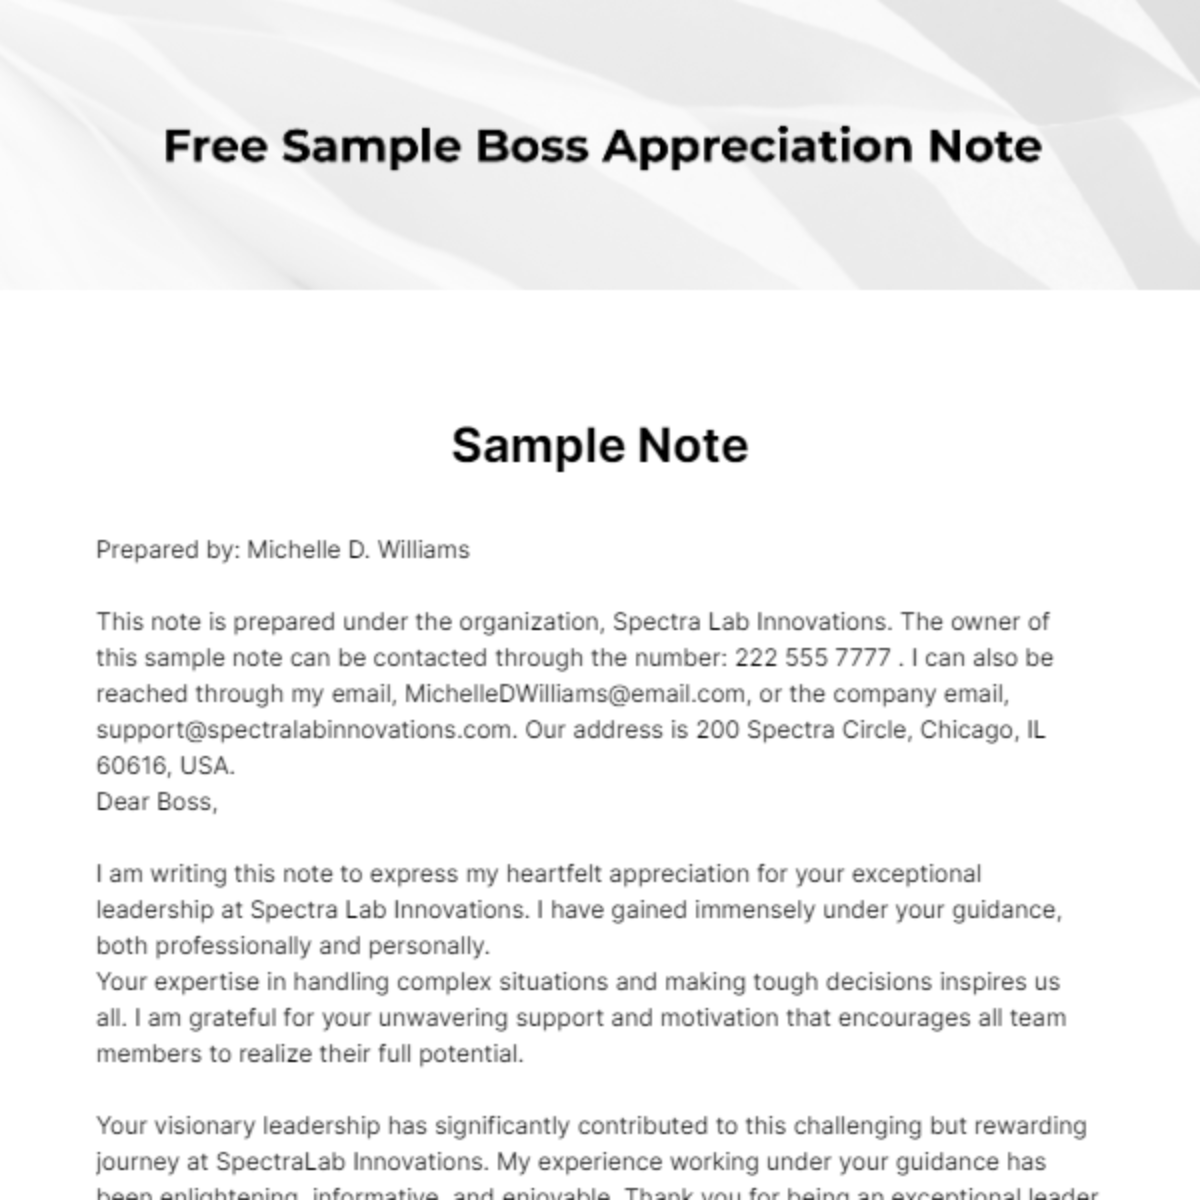 Free Sample Boss Appreciation Note Template